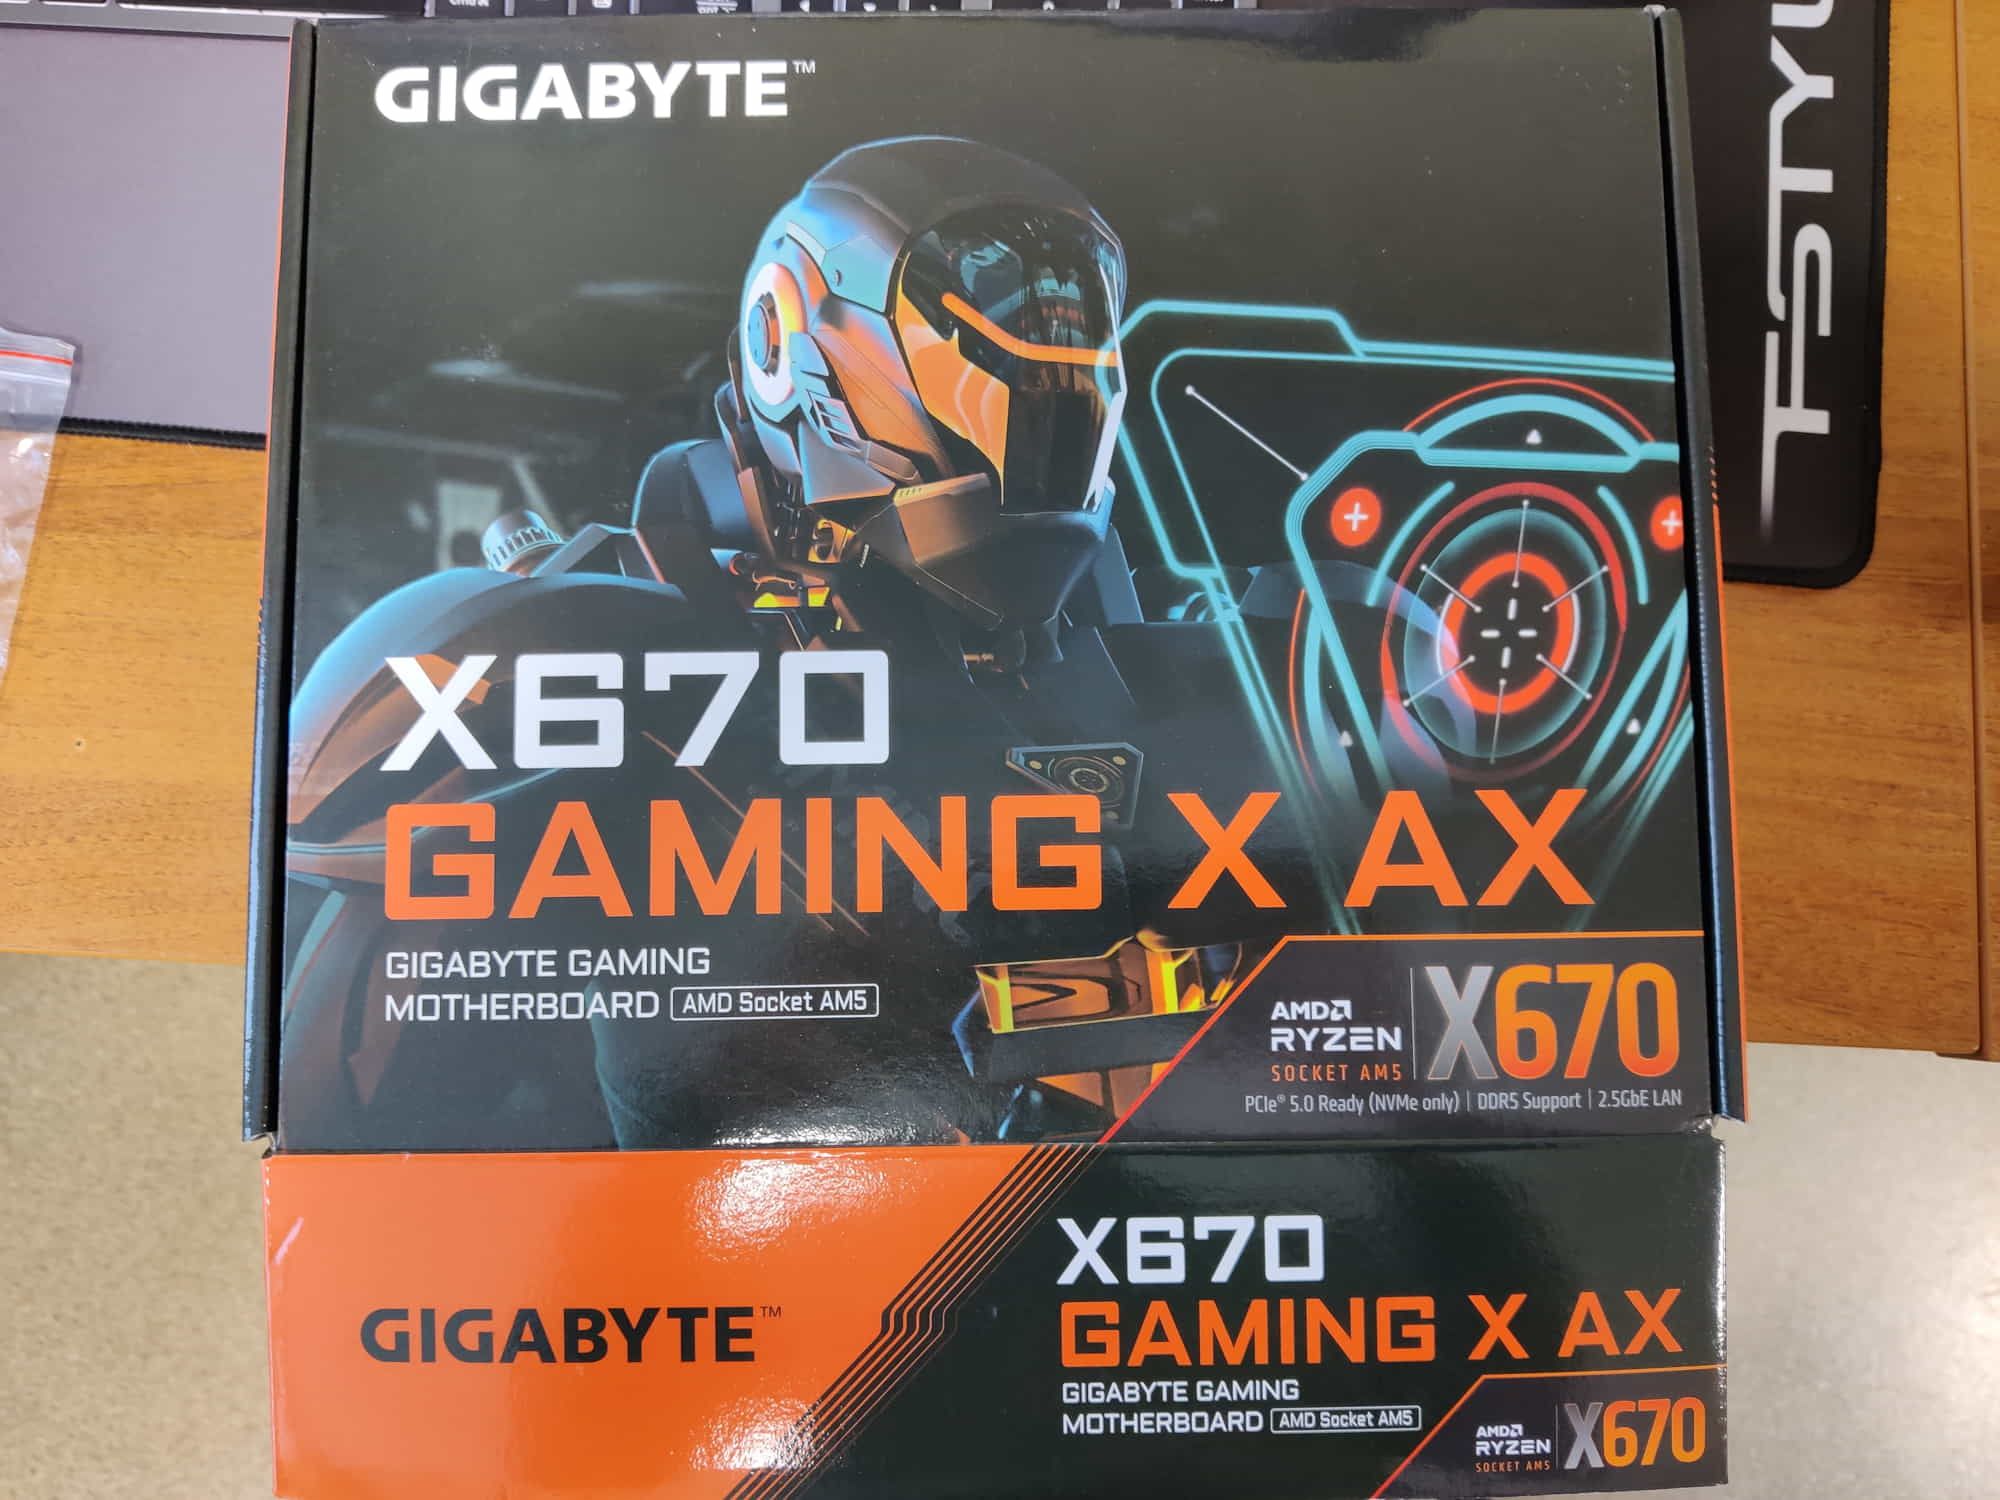 Gigabyte x670 gaming ax. Gigabyte x670 Gaming x AX. X670 Gaming x AX. X670 Gaming x AX замена батарейки. Gigabyte x670 Gaming x AX высота от SSD до видеокарты.